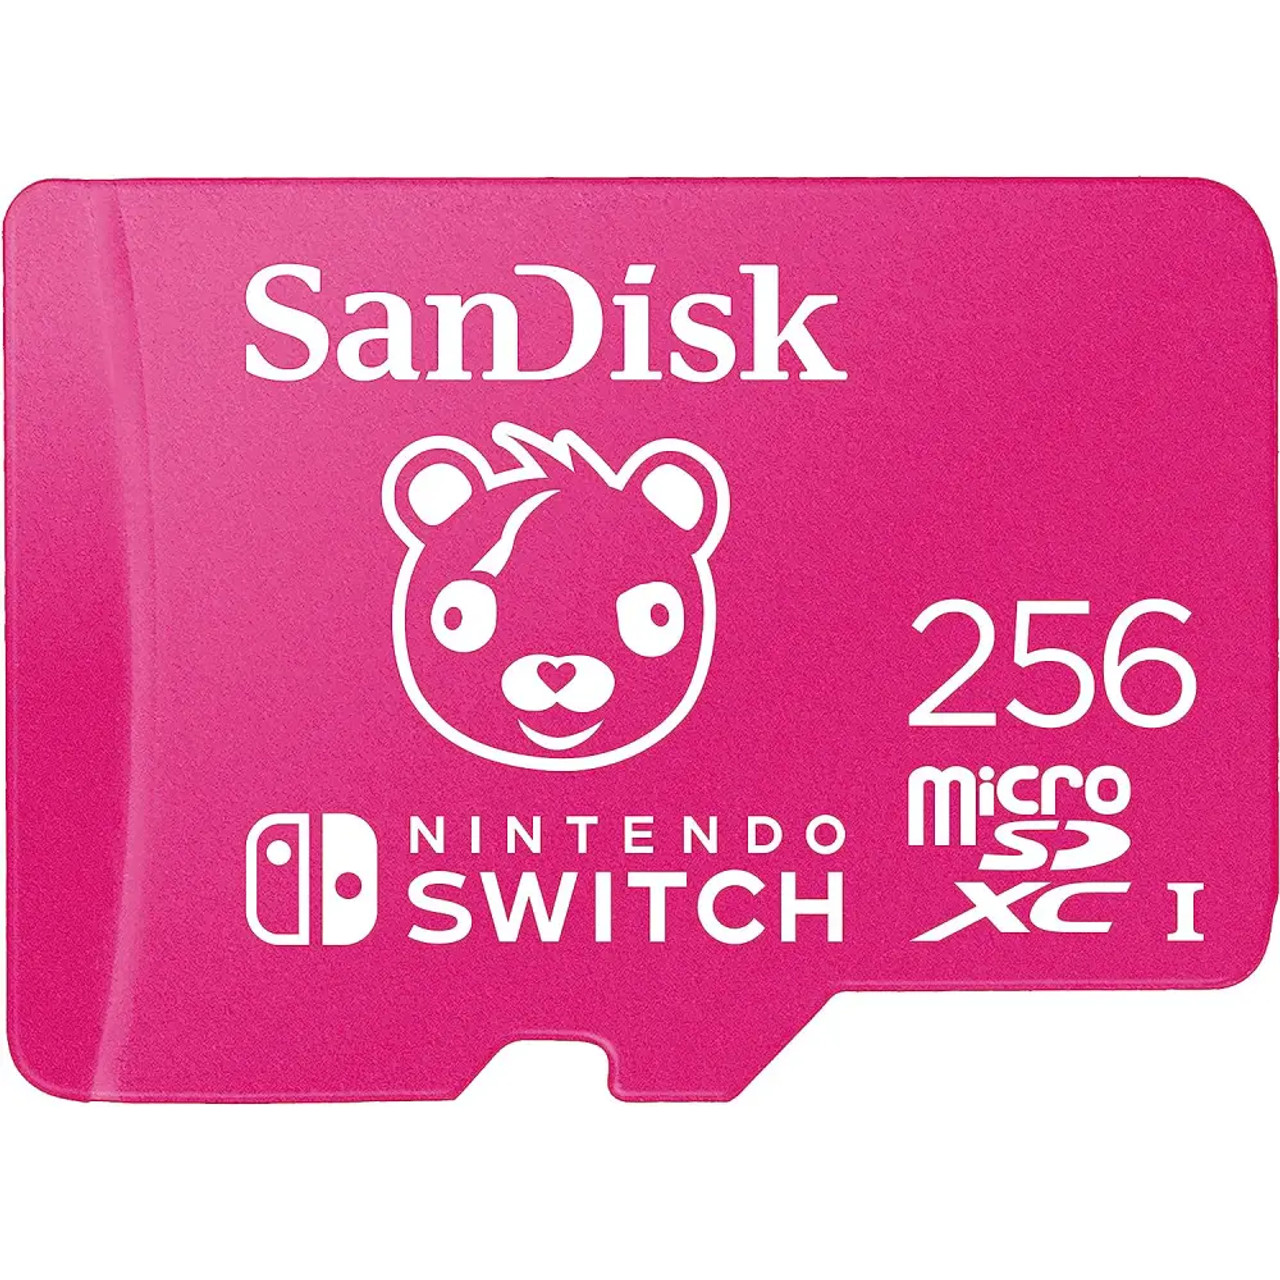 OEM Nintendo Switch Digital Camera Go Pro memory card SD PNY- U